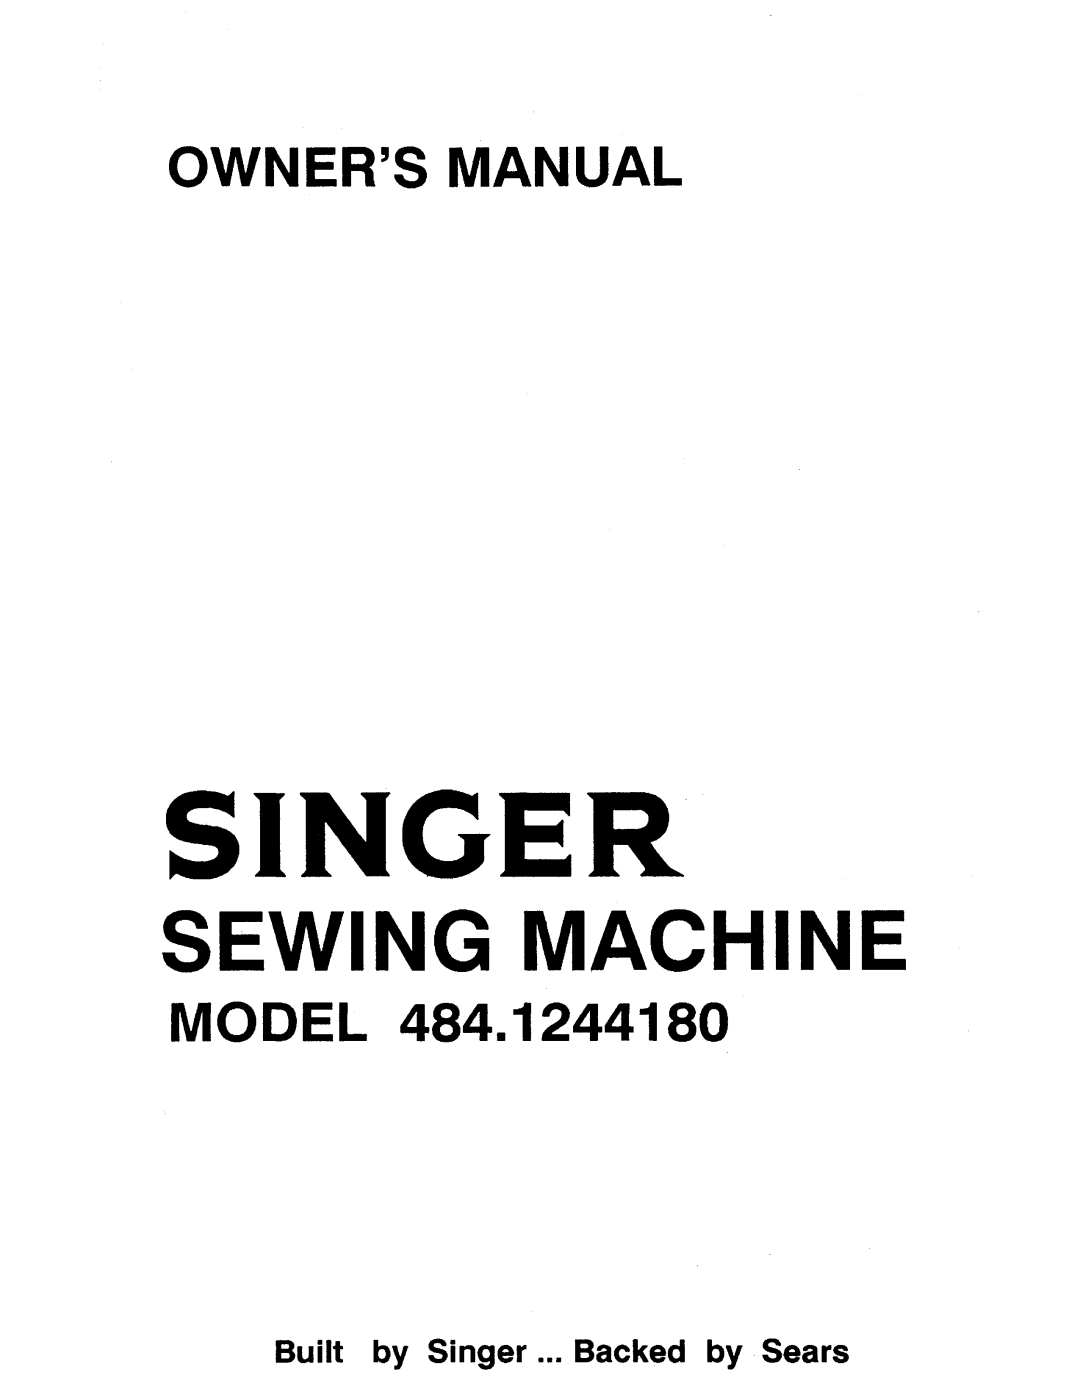 Singer 484.124418 manual 